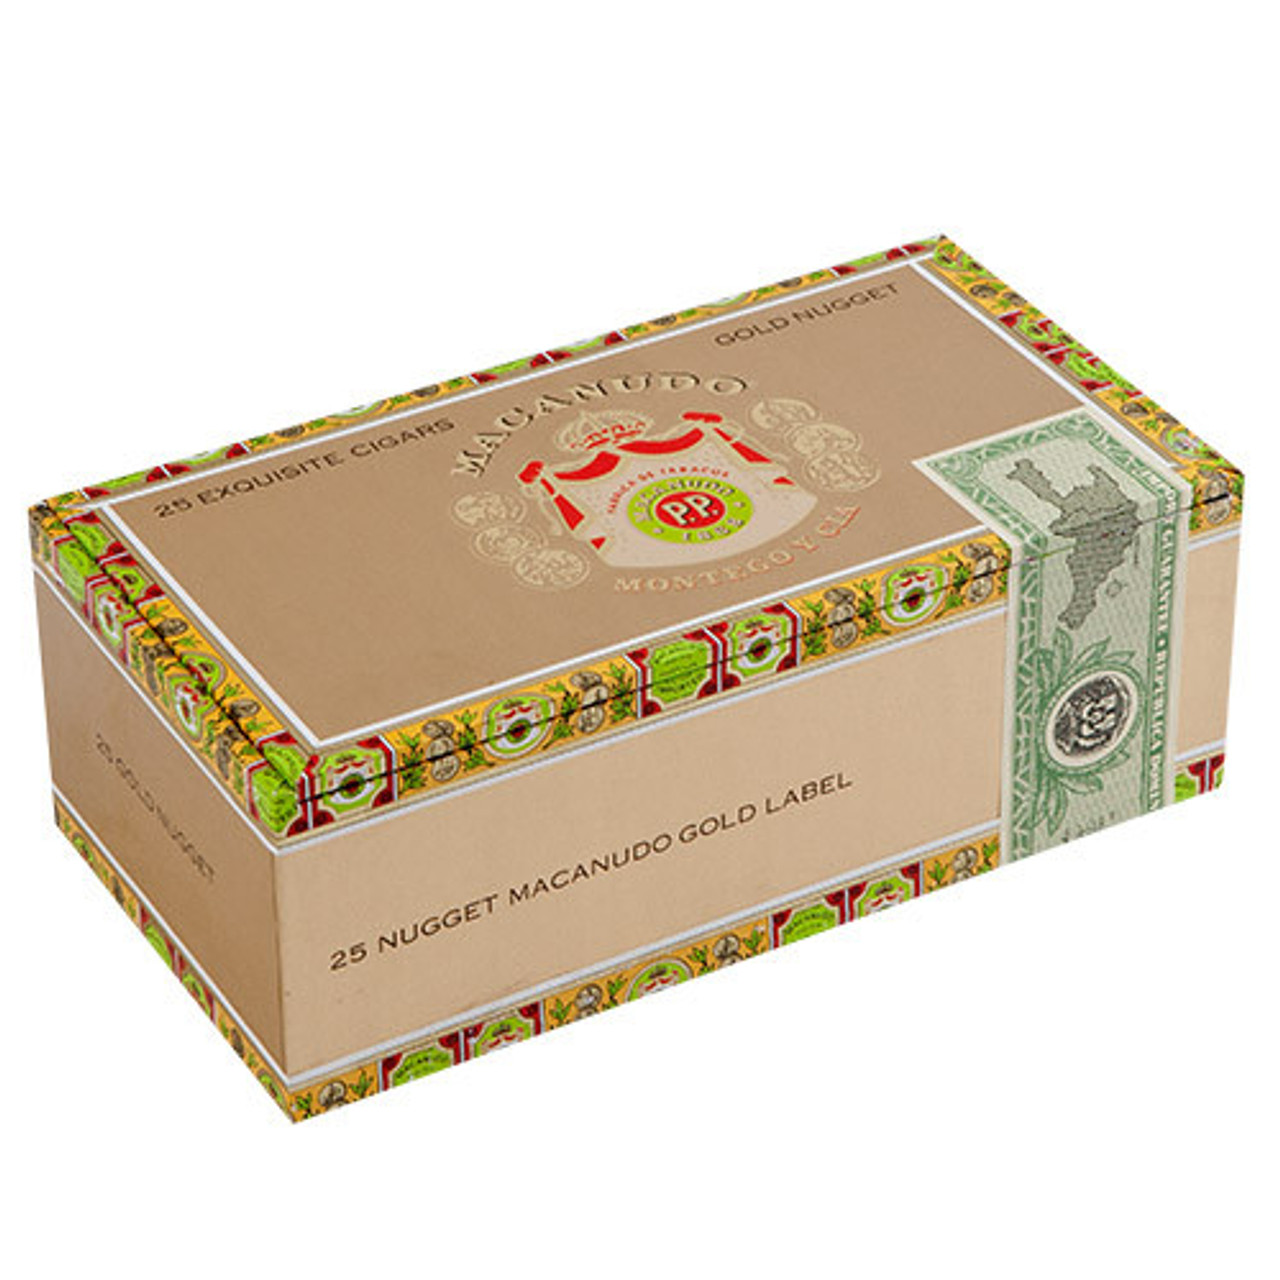 Macanudo Gold Label Duke of York Cigars - 5.25 x 54 (Box of 25) Open